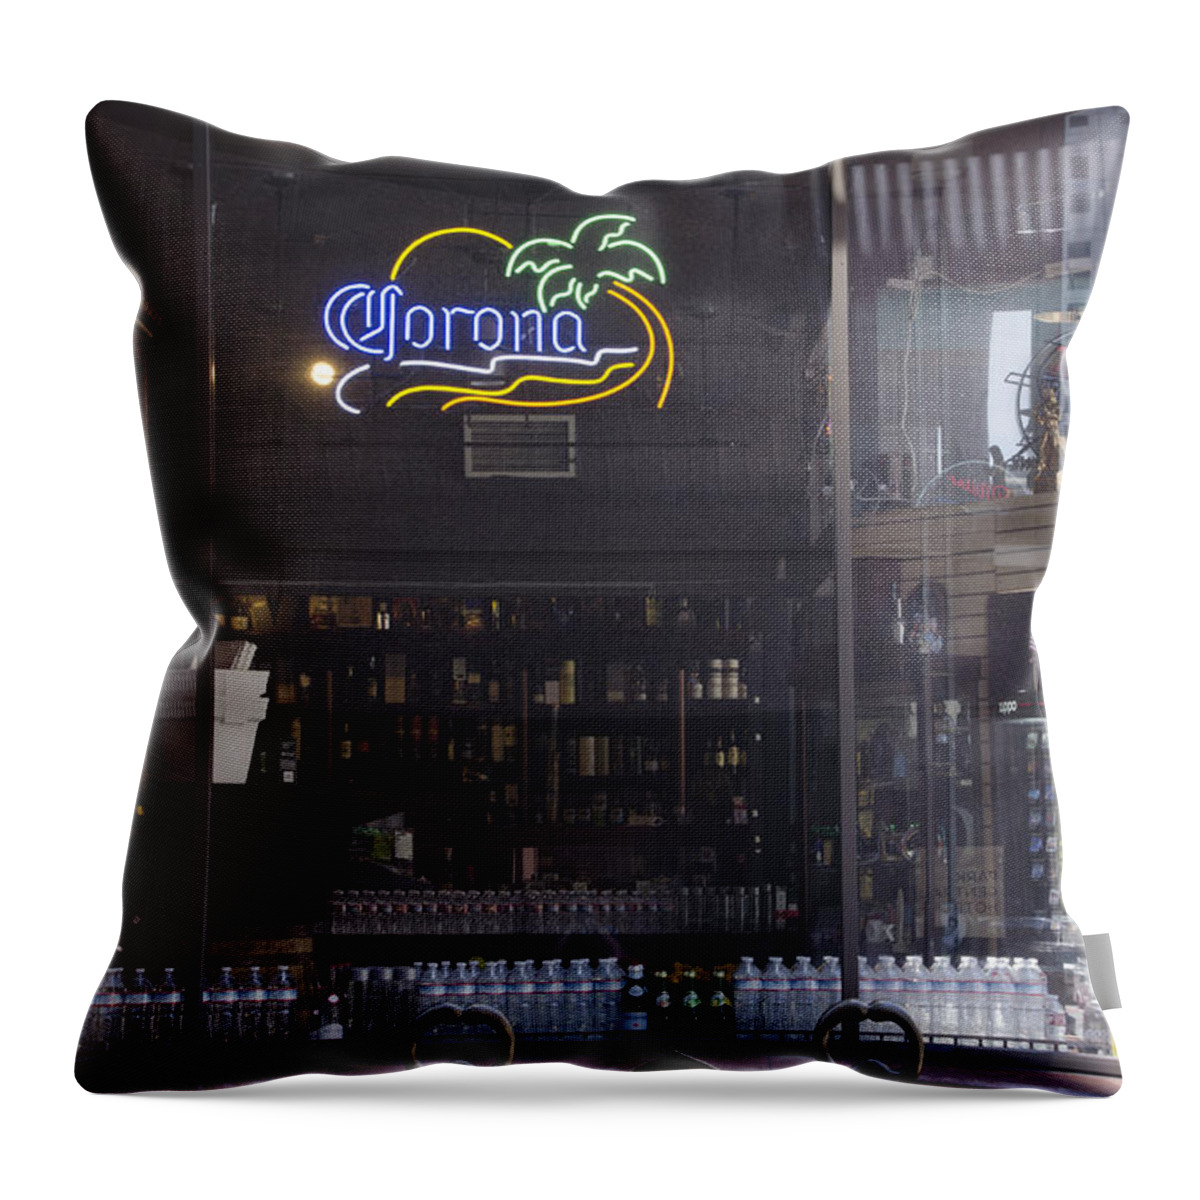 Corona Throw Pillow featuring the photograph At the Liquor Store by Erik Burg